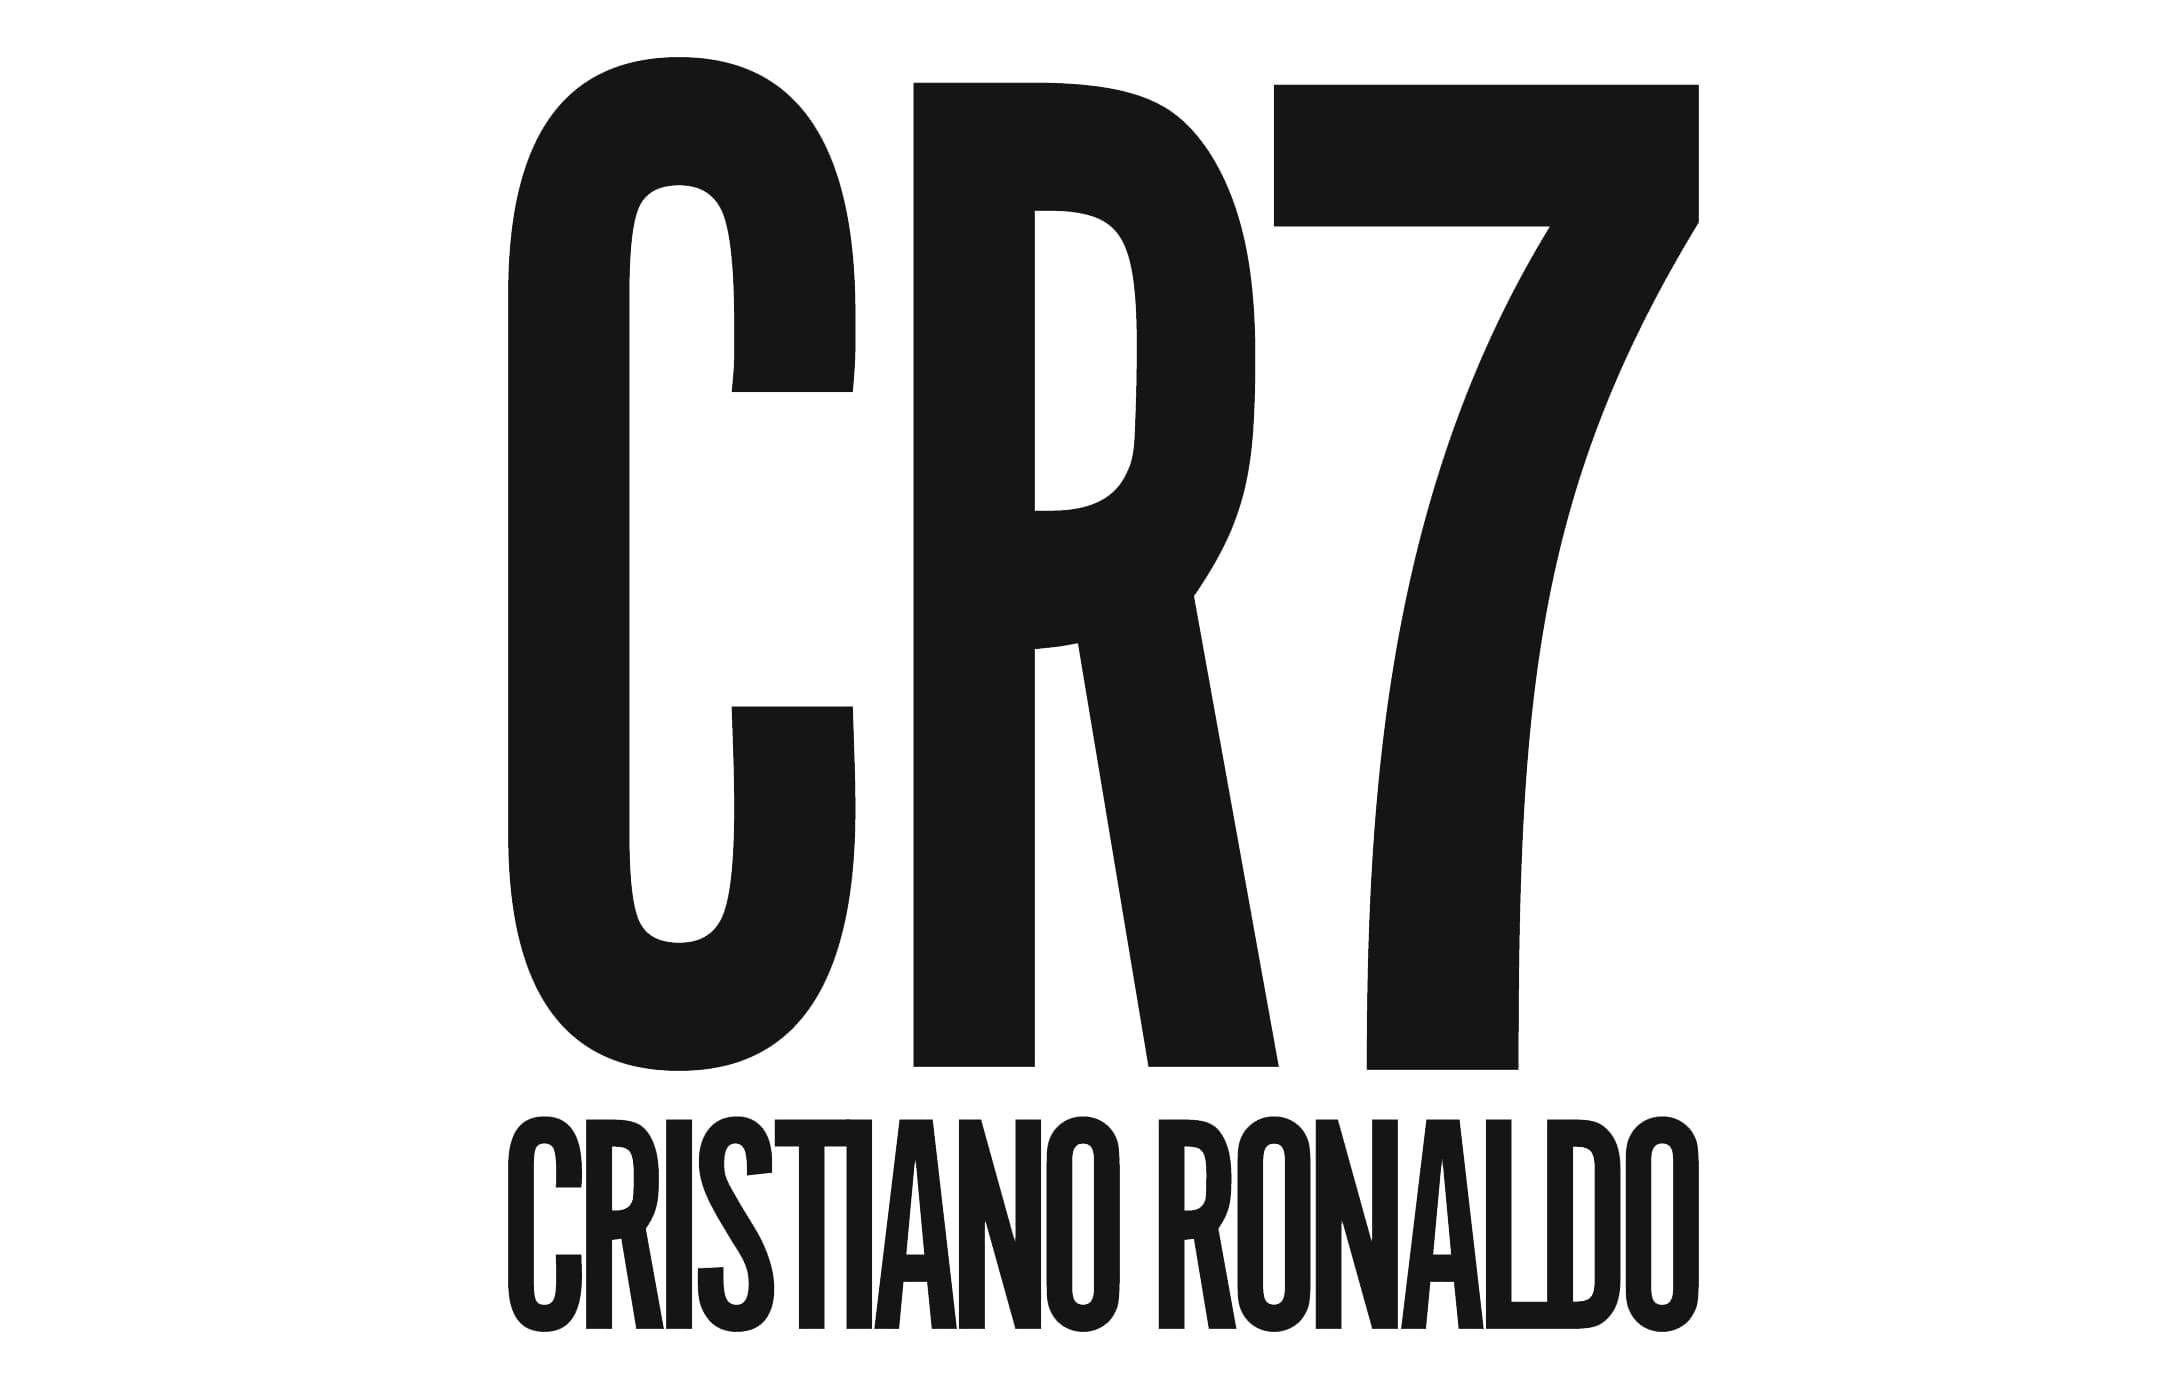 Cristiano Ronaldo Wallpaper Projects :: Photos, videos, logos,  illustrations and branding :: Behance